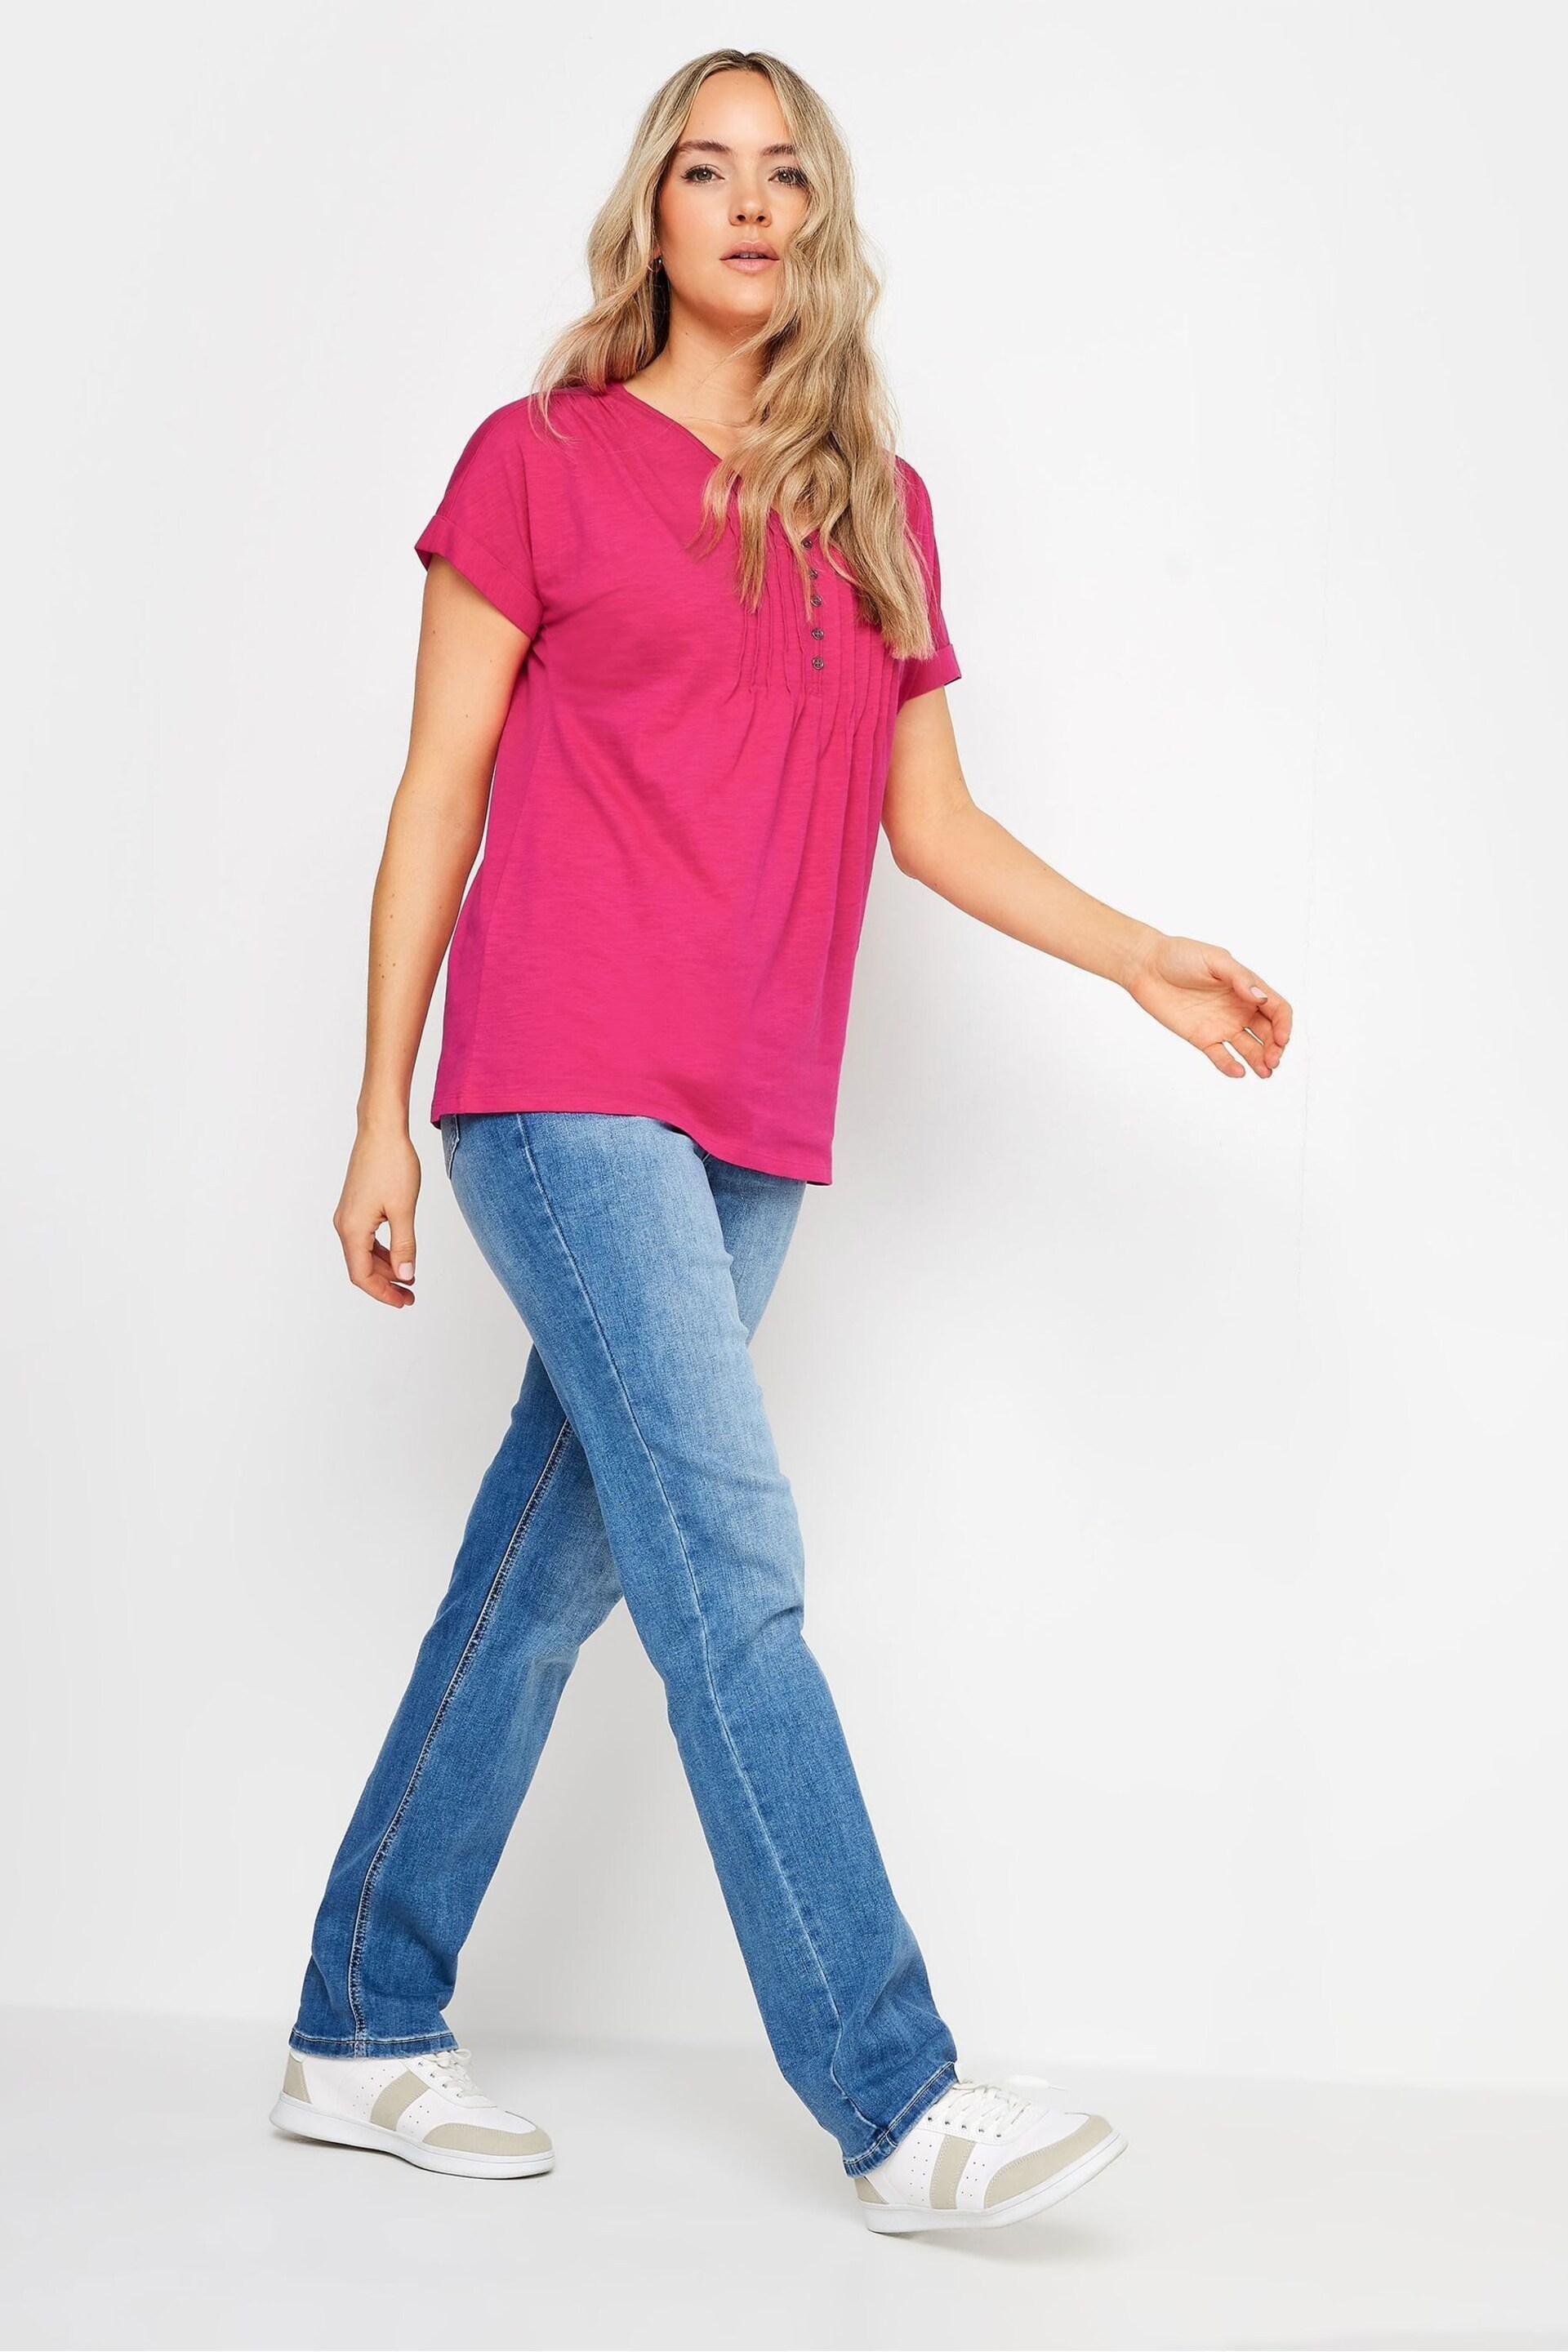 Long Tall Sally Pink LTS Tall Khaki Green Cotton Henley T-Shirt - Image 2 of 5